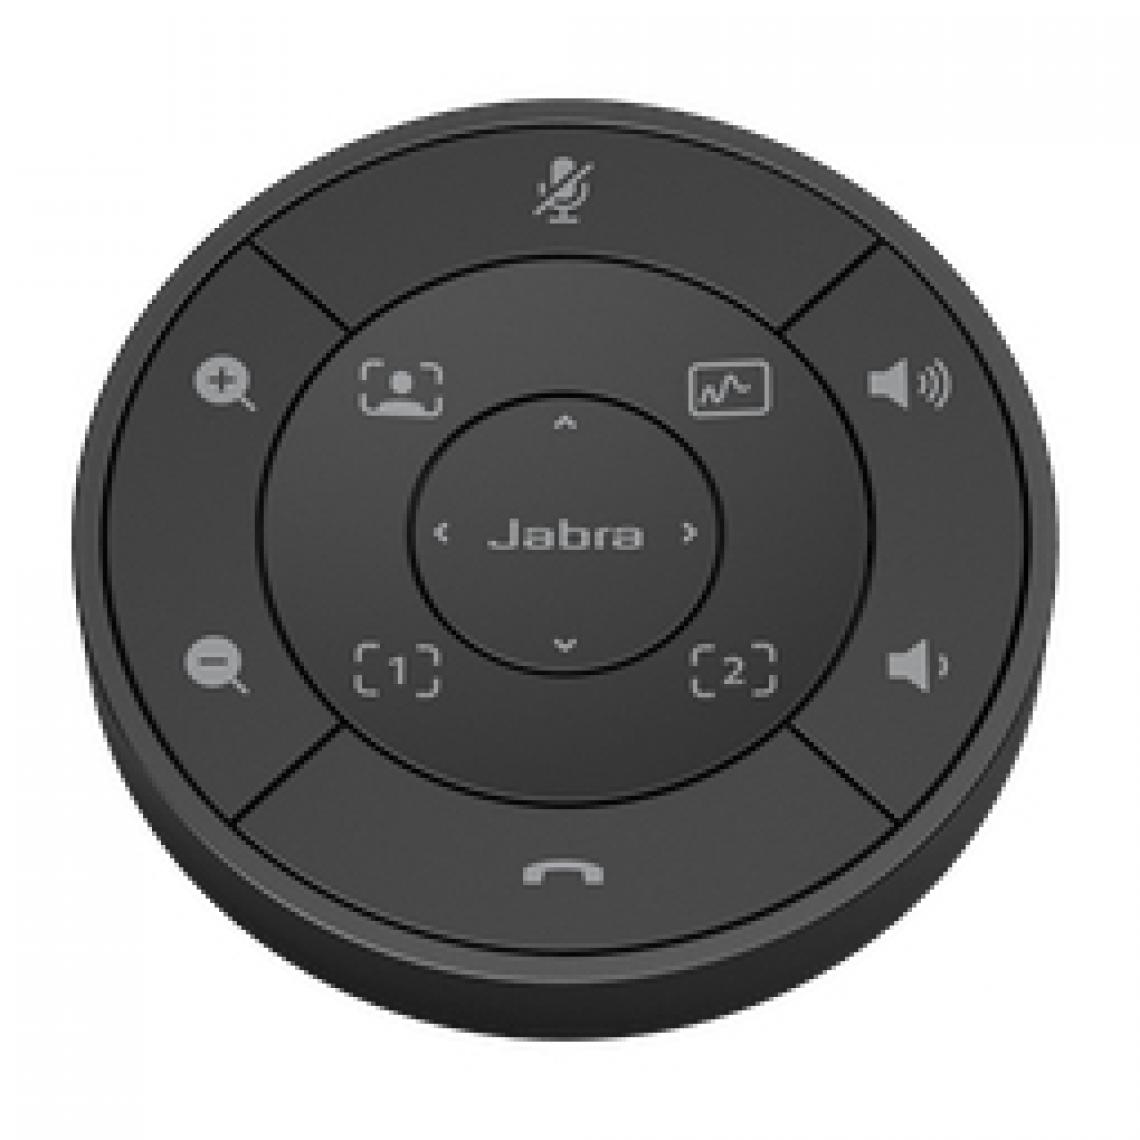 Jabra - Remote - Webcam